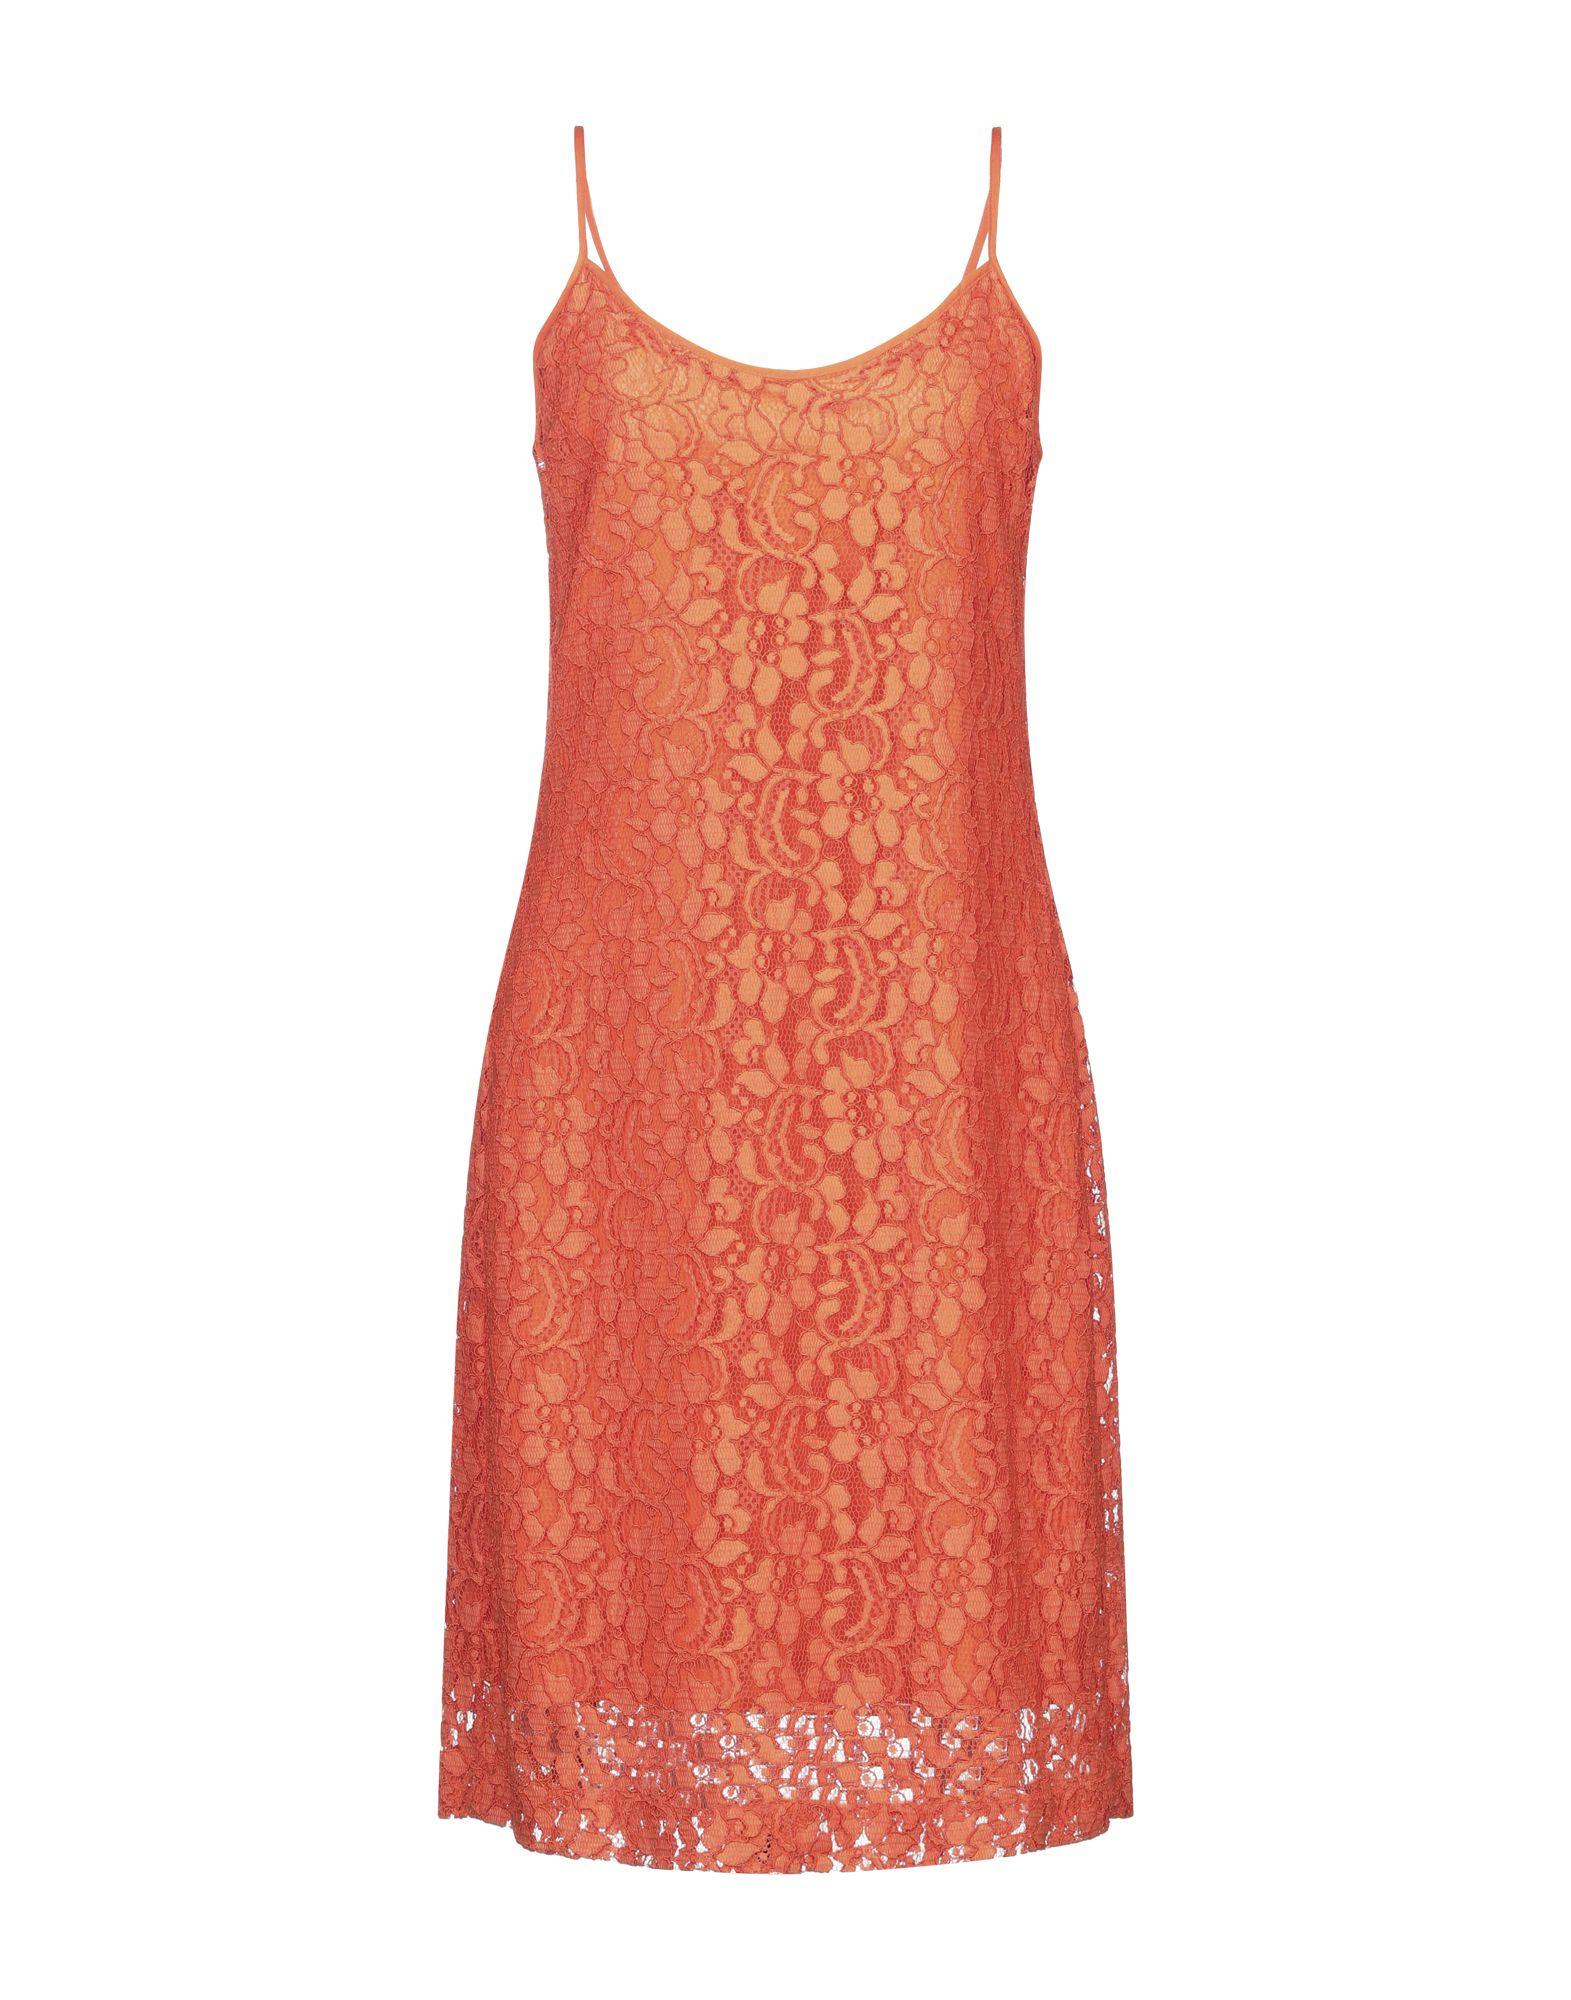 MSGM Lace Knee-length Dress in Orange - Lyst